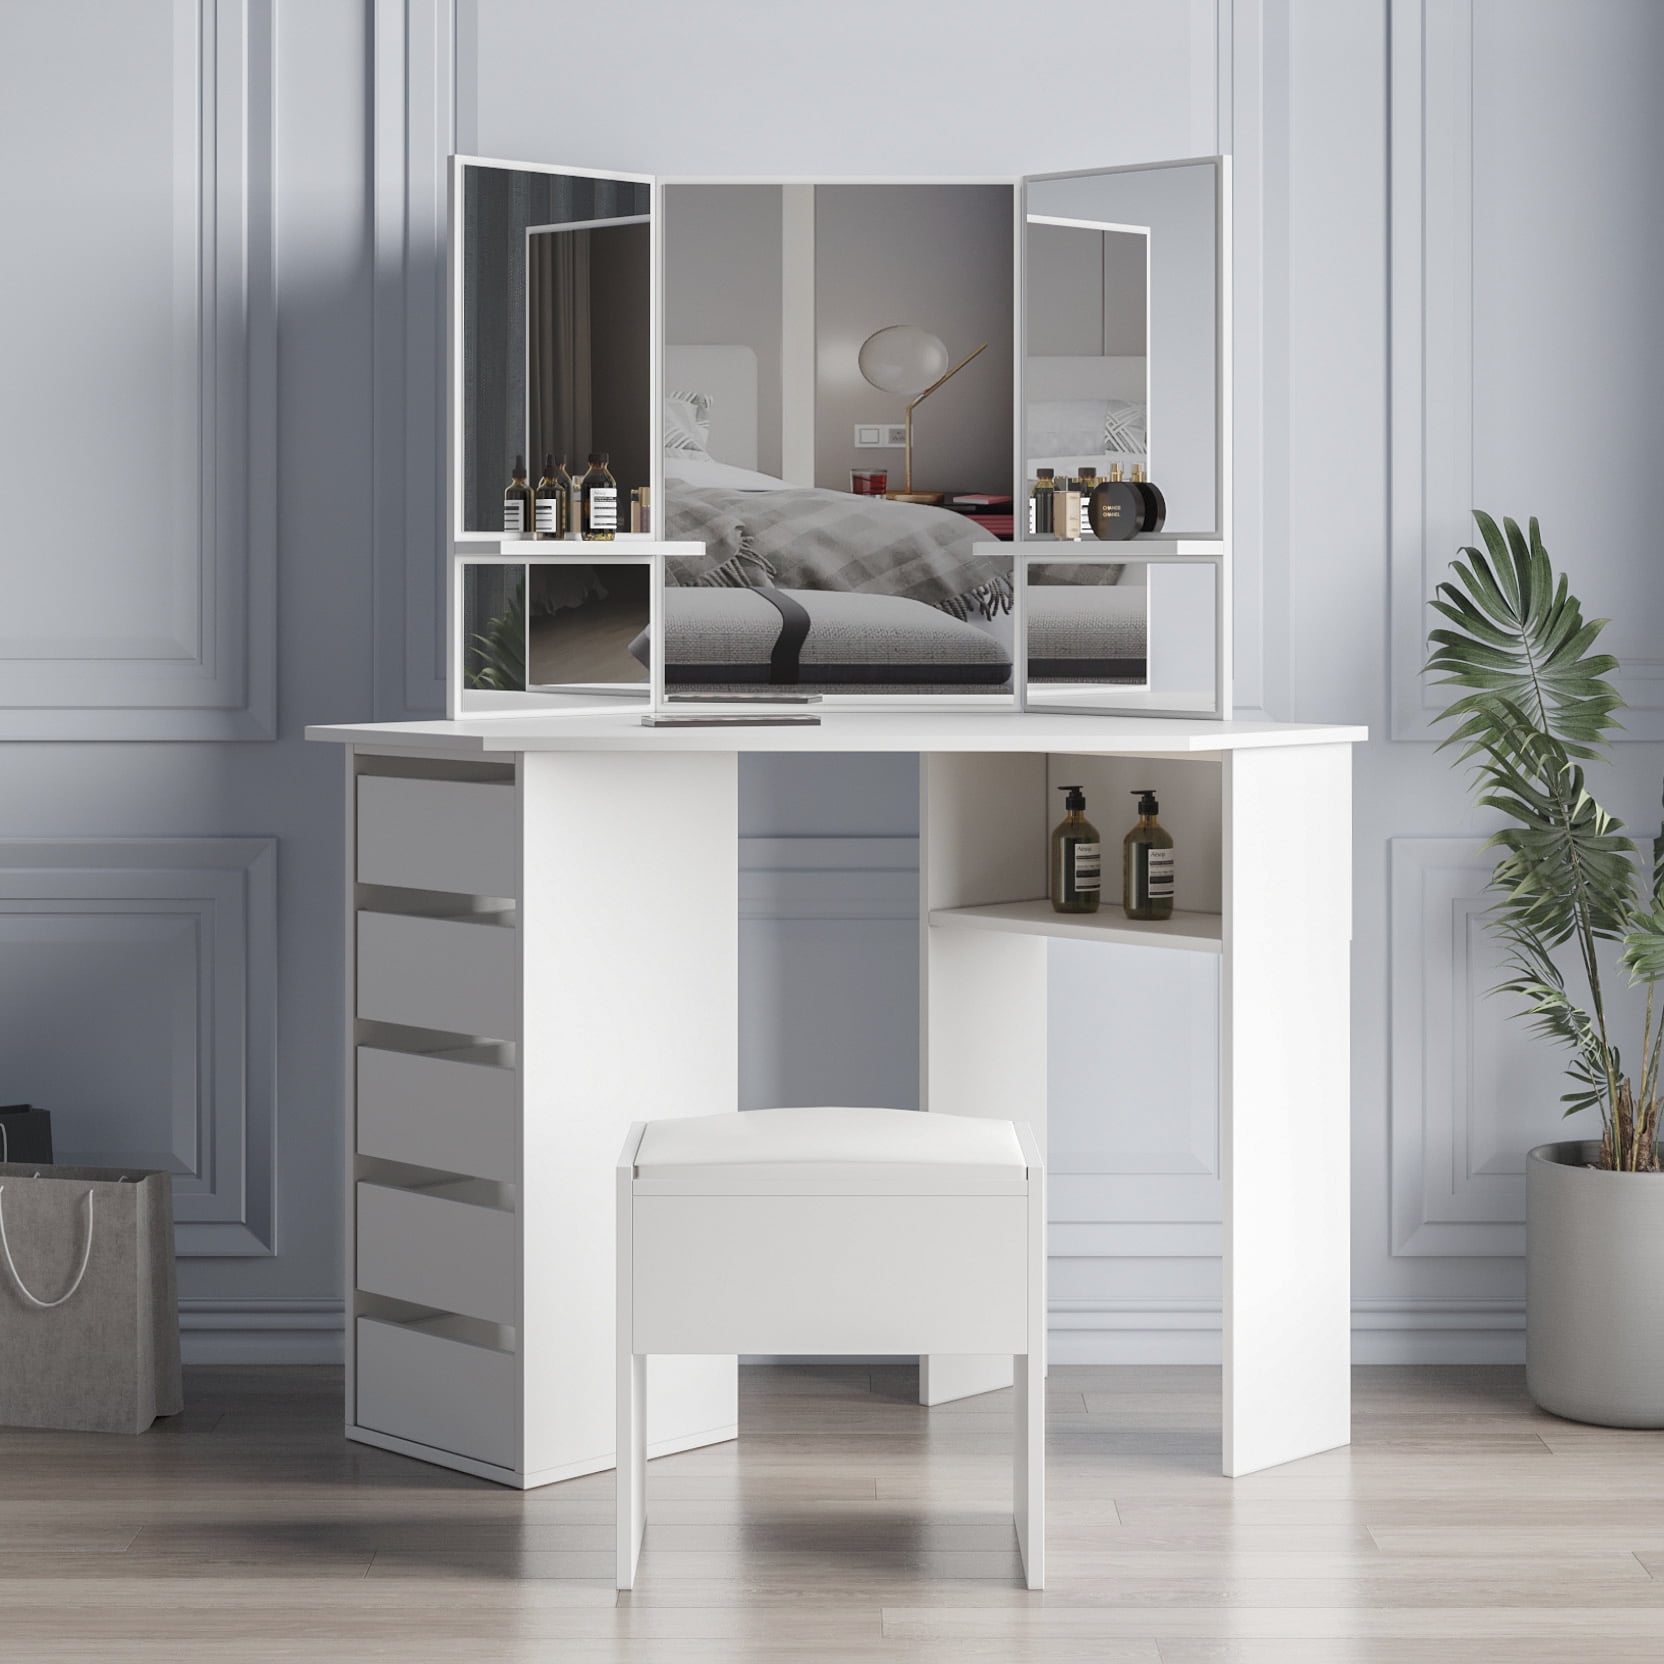 Newzeal Corner Dressing Table with Stool Makeup Vanity Table Bedroom Furniture 